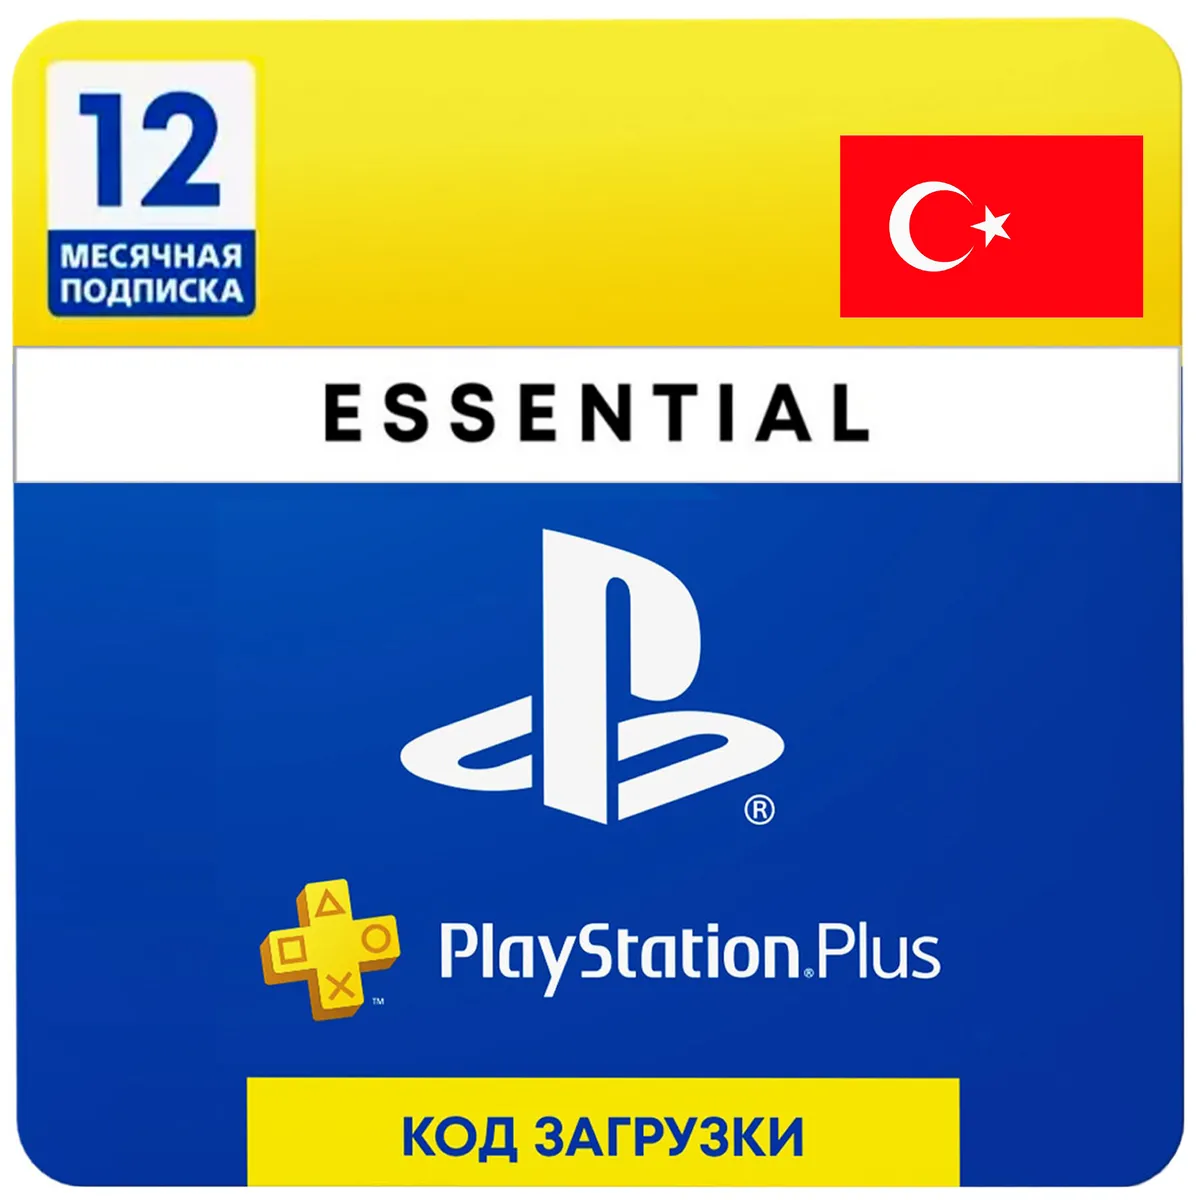 Playstation Plus Essential 12 Month membership TURKEY